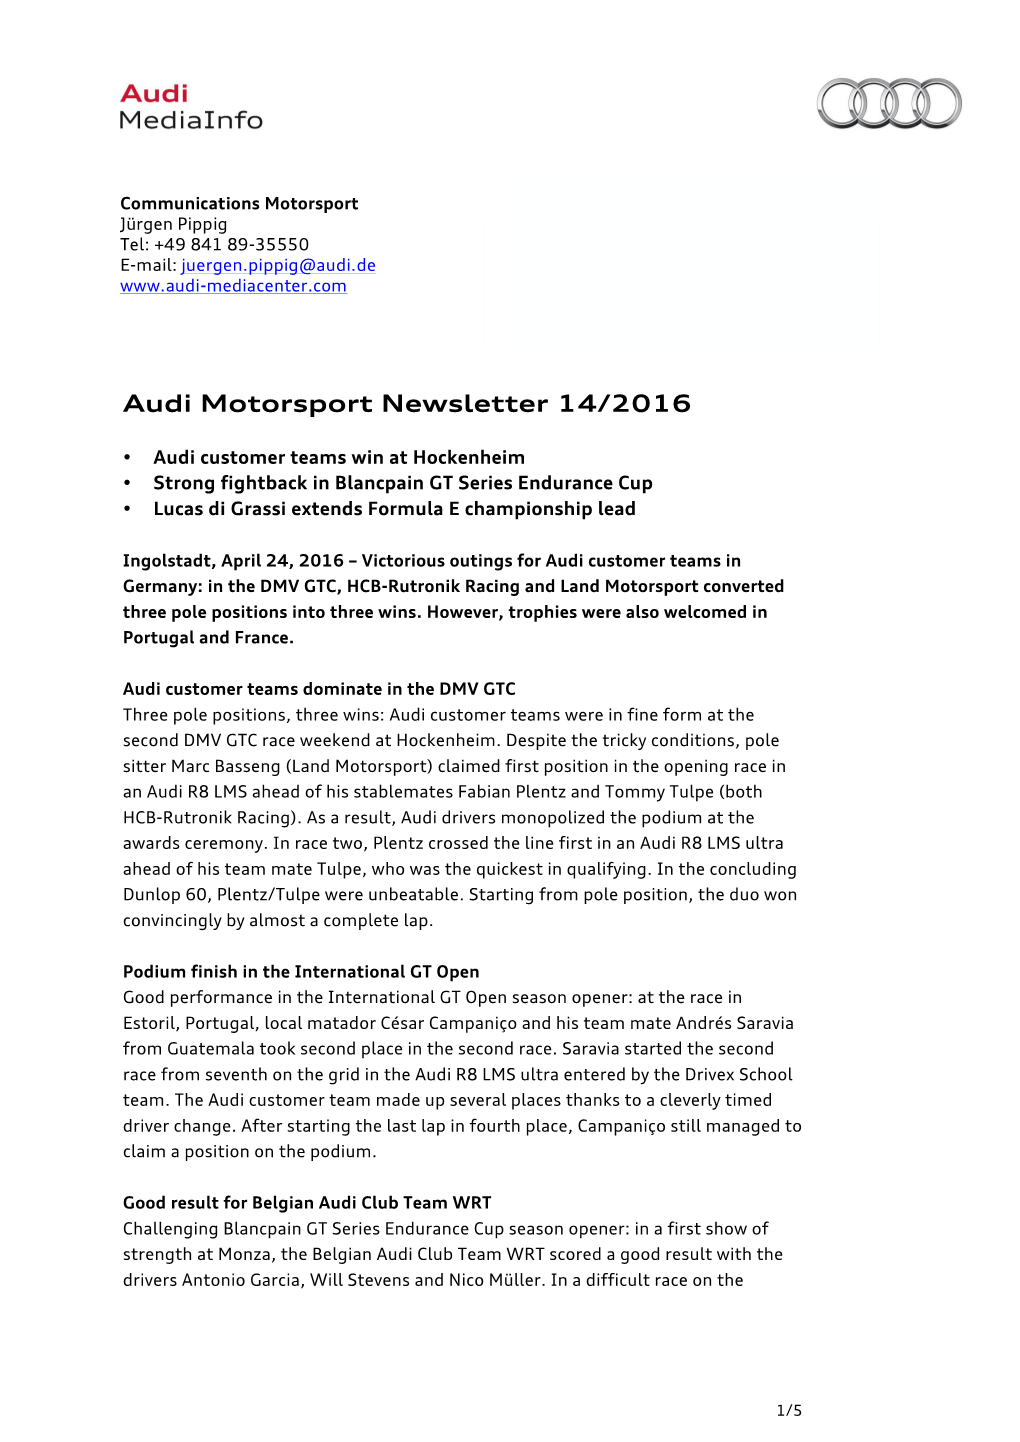 Audi Motorsport Newsletter 14/2016